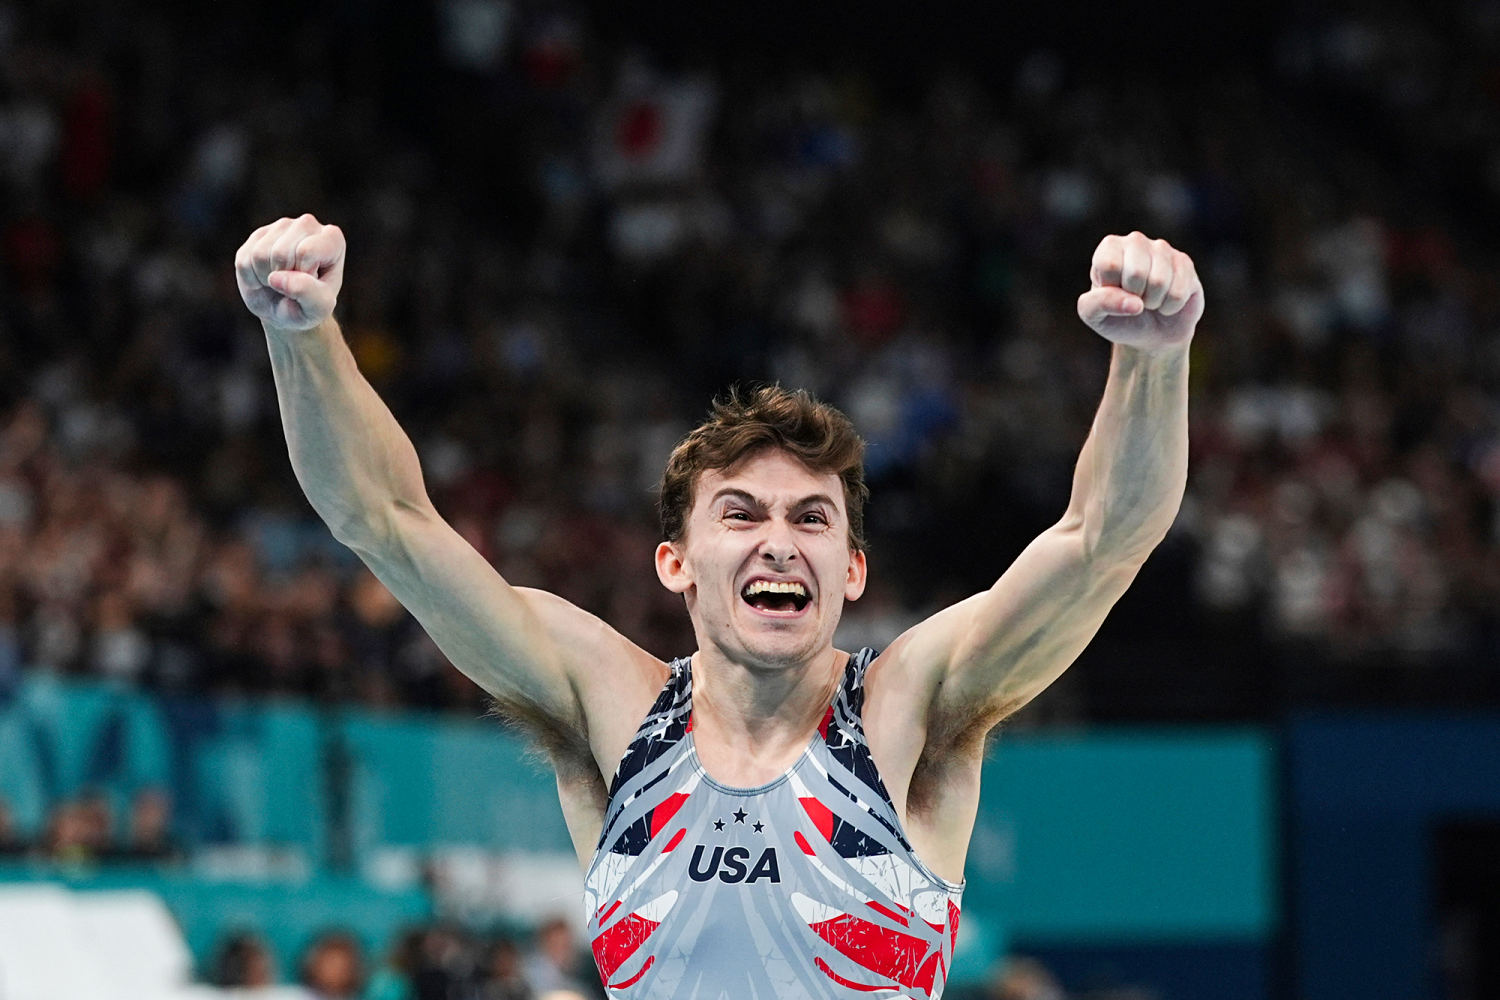 Pommel horse star Stephen Nedoroscik goes viral after Team USA wins bronze